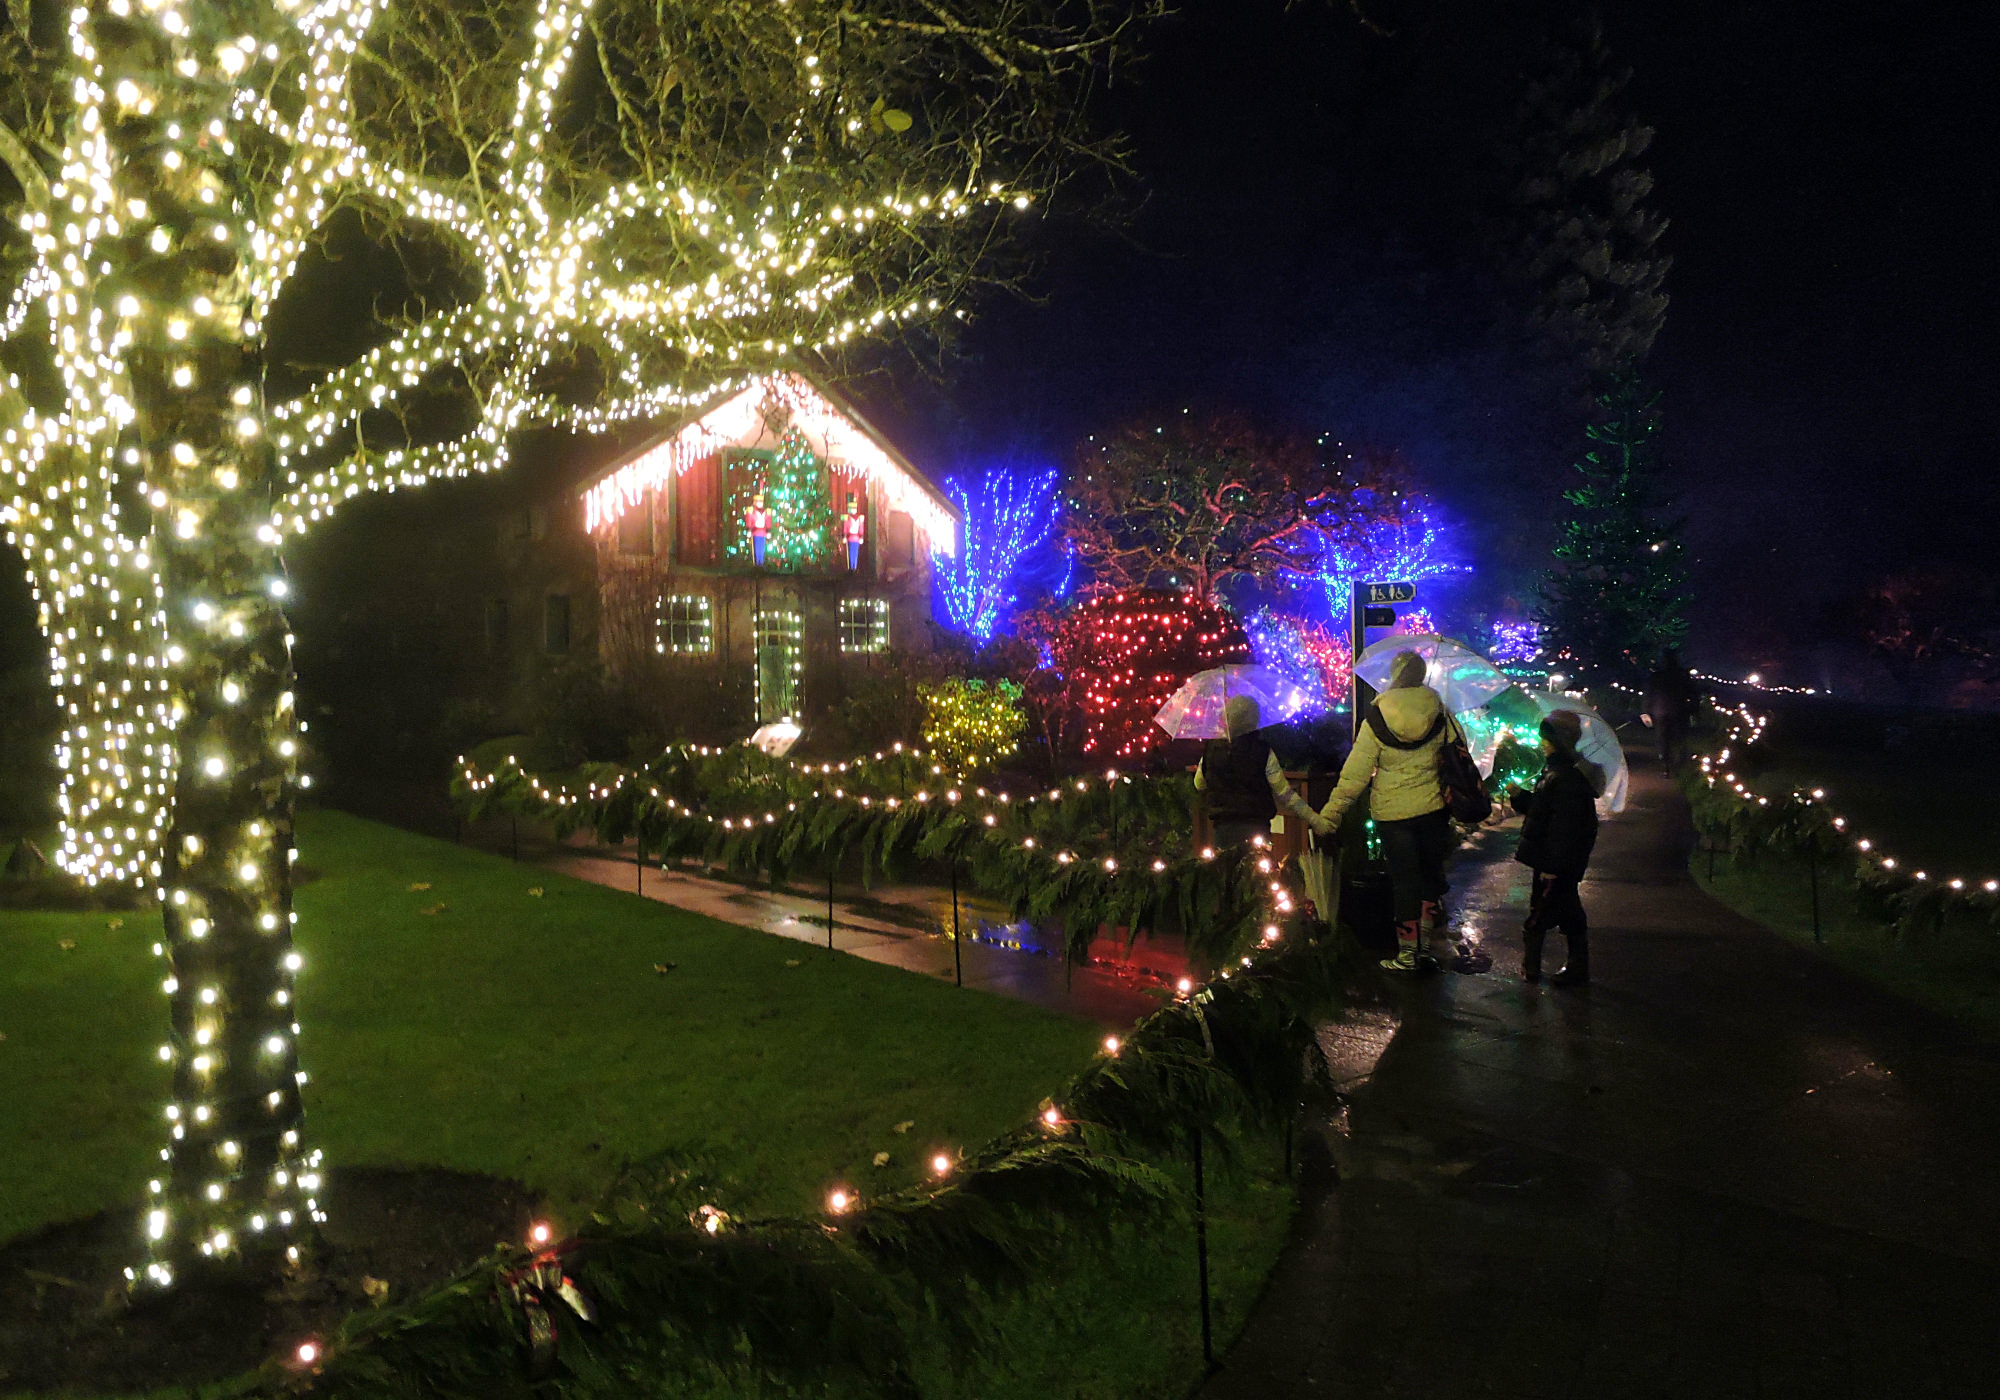 Christmas Lights at Butchart Gardens, Victoria BC, Even a d…